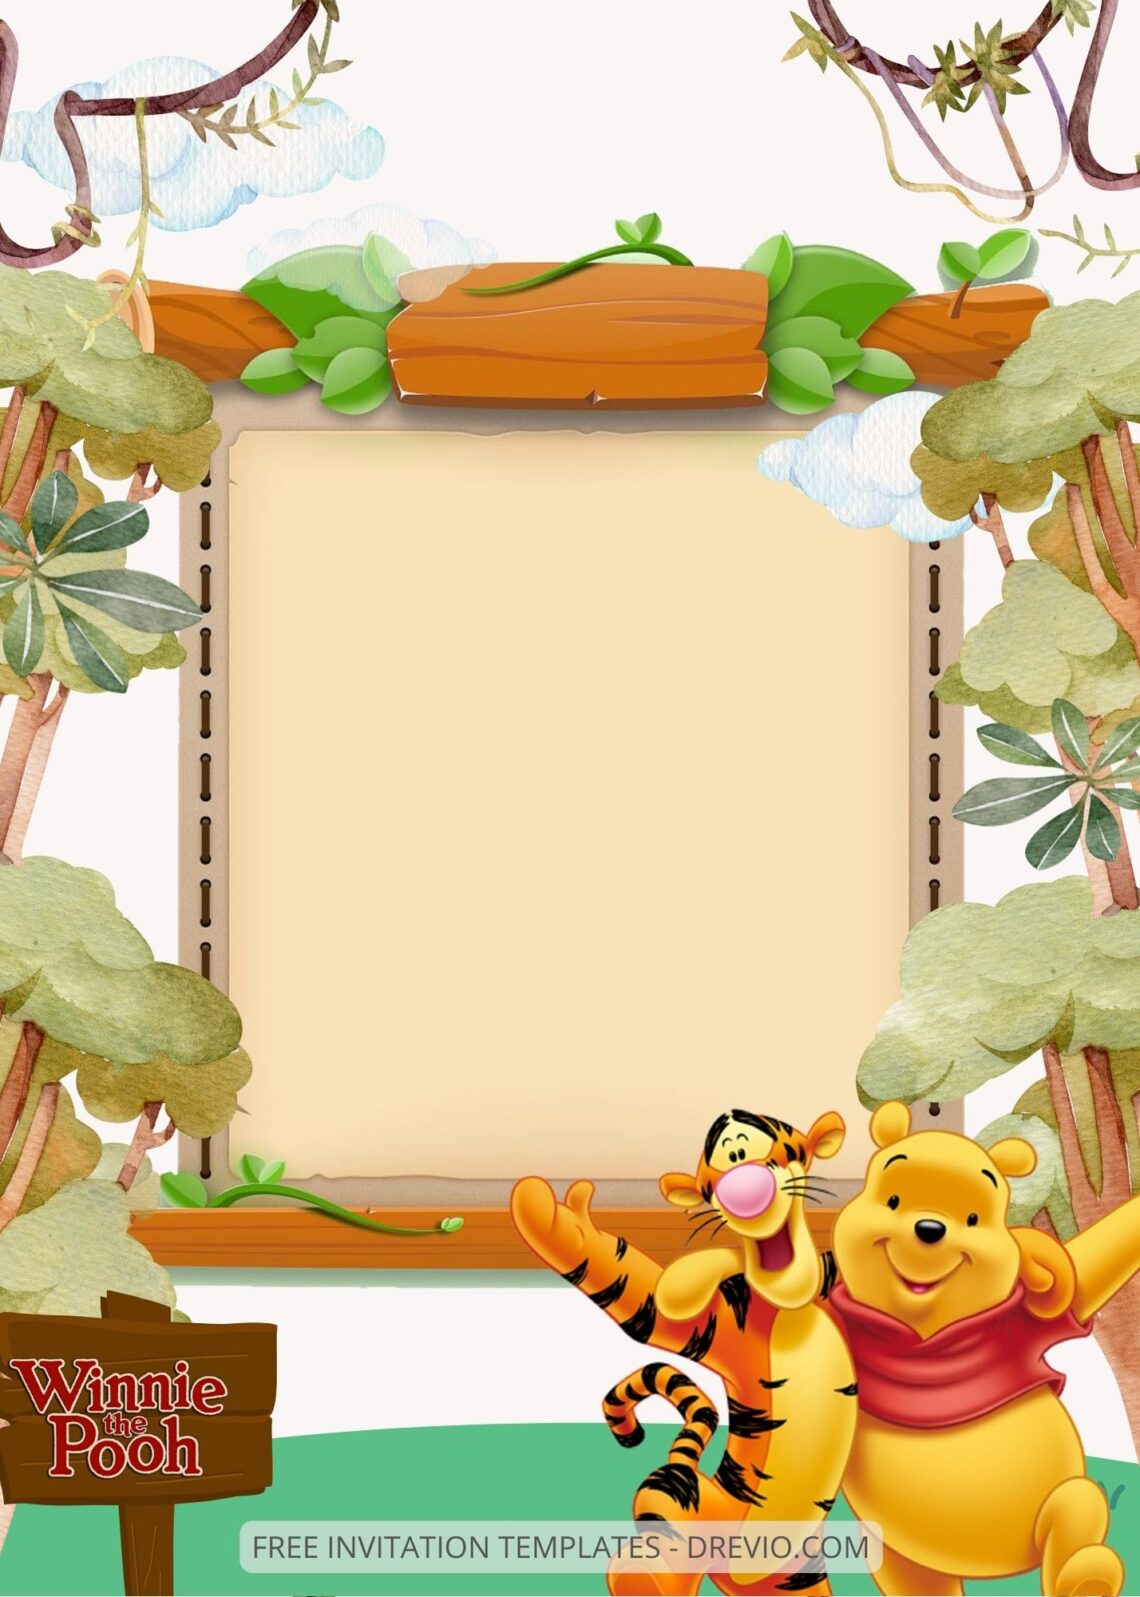 FREE EDITABLE - 9+ Winnie The Pooh Canva Birthday Invitation Templates three